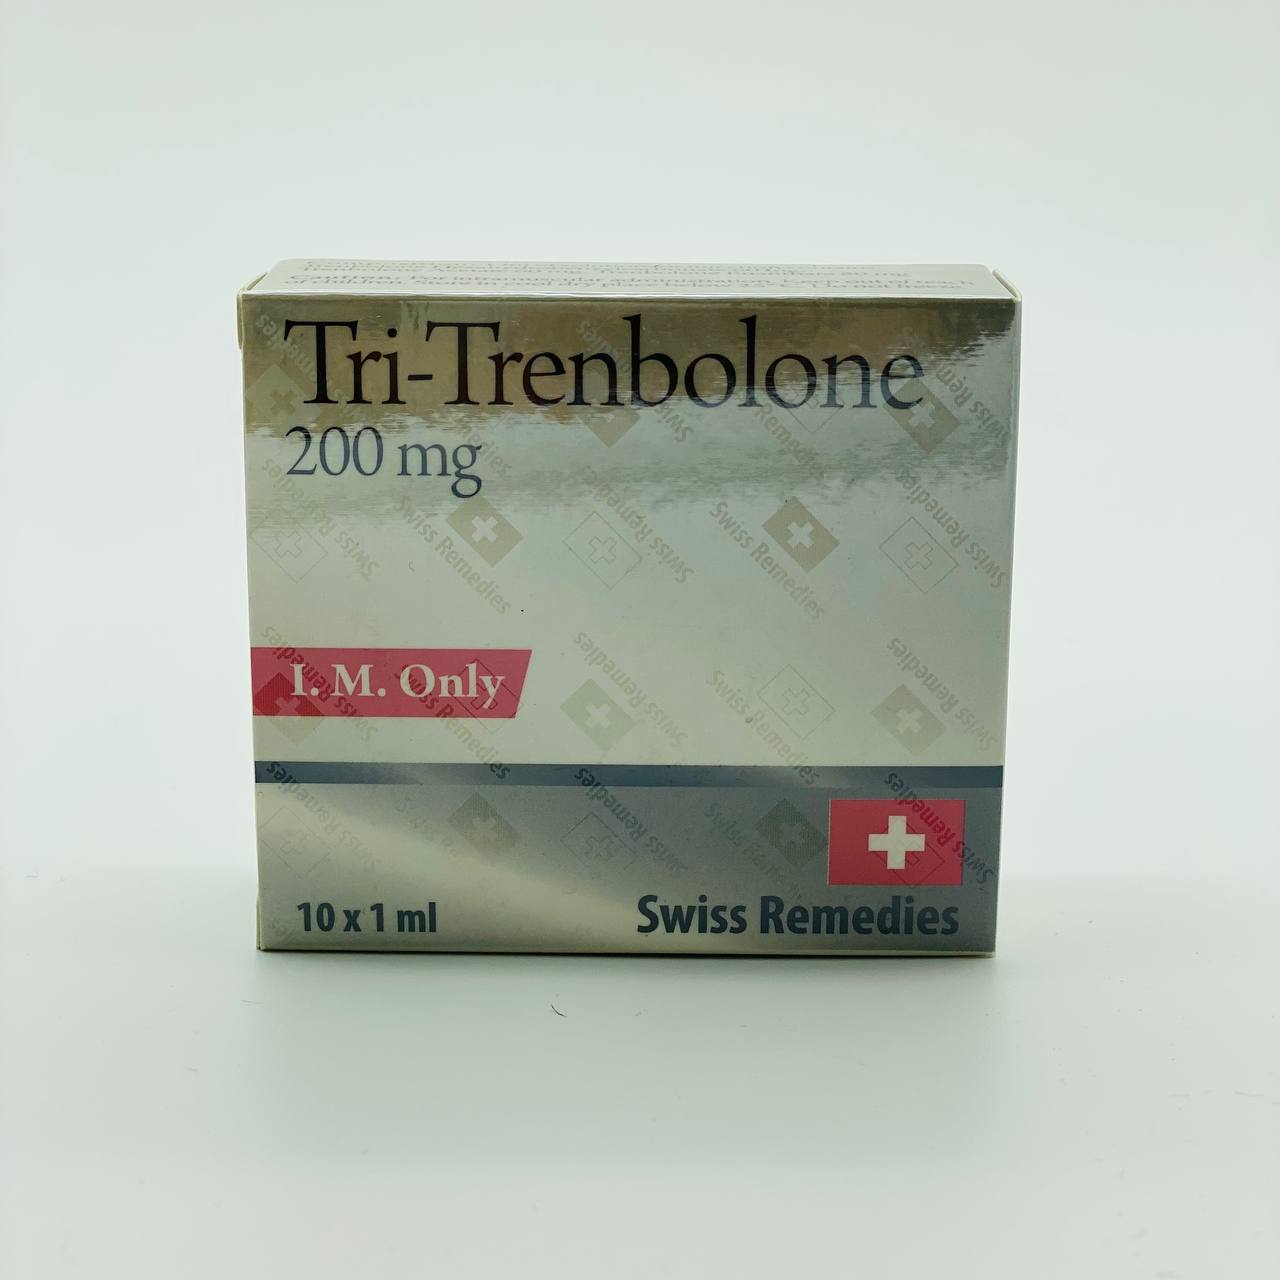 Tri-Trenbolone 200 mg Swiss Remedies Iniezione di steroidi